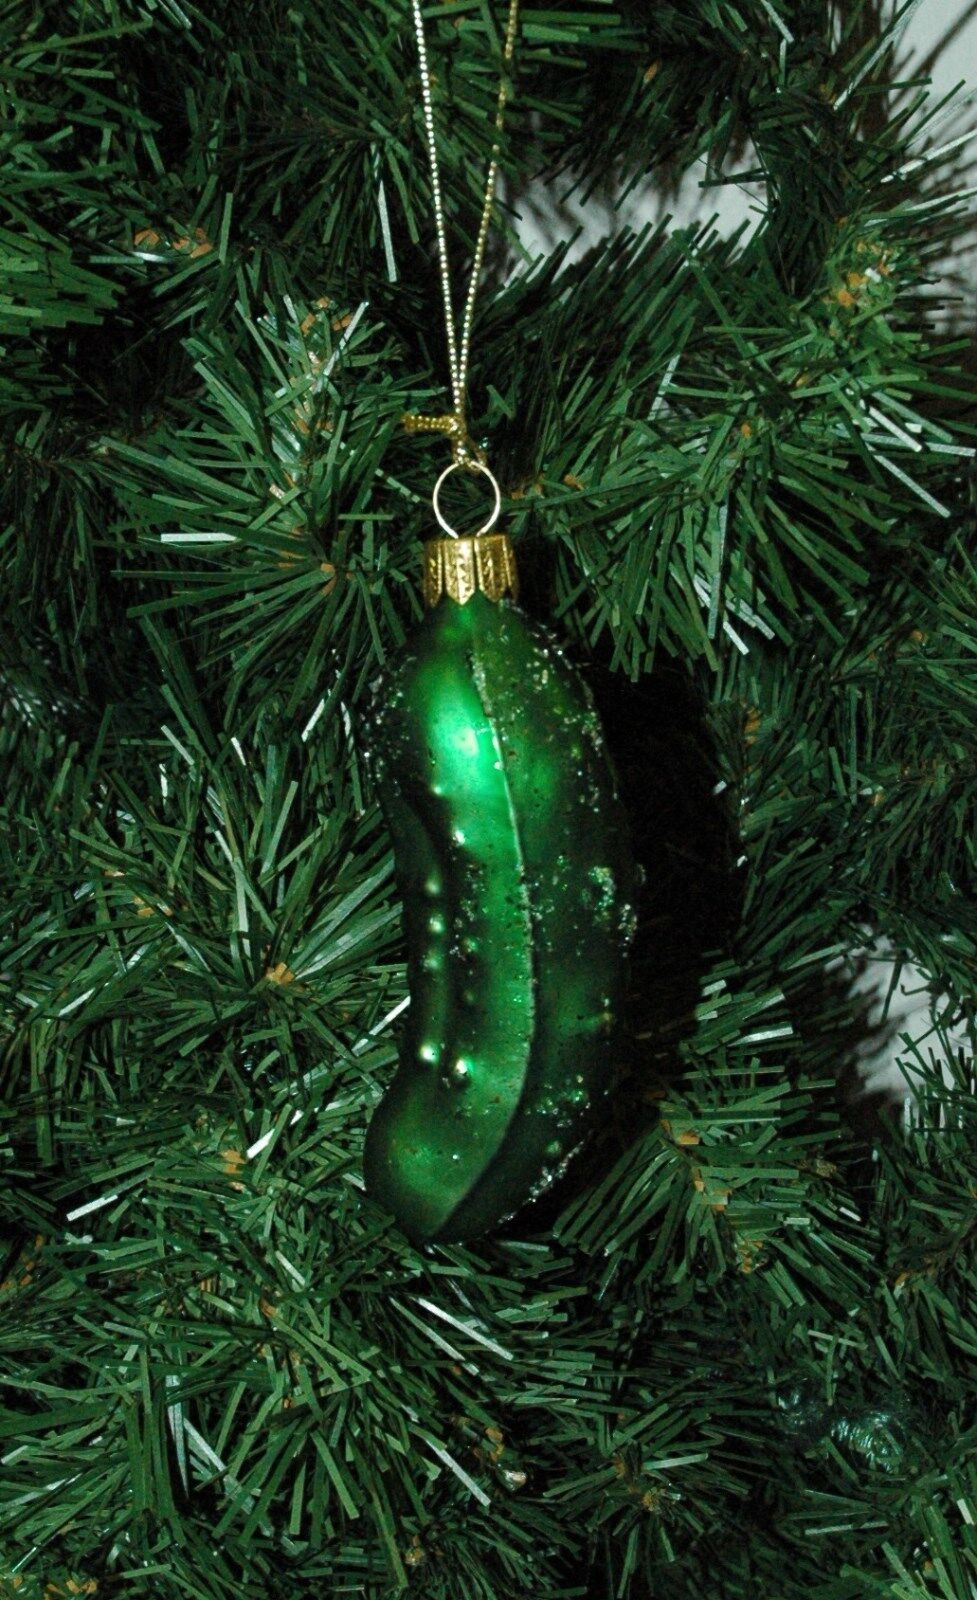 The Christmas Pickle Christmas Ornament